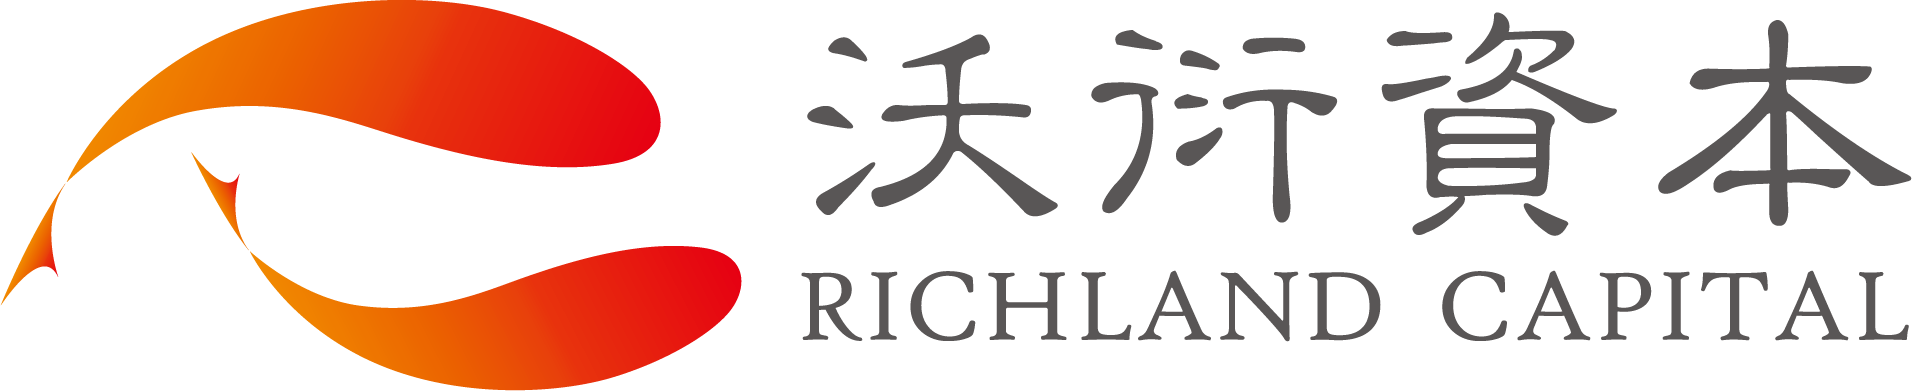 Richard Capital